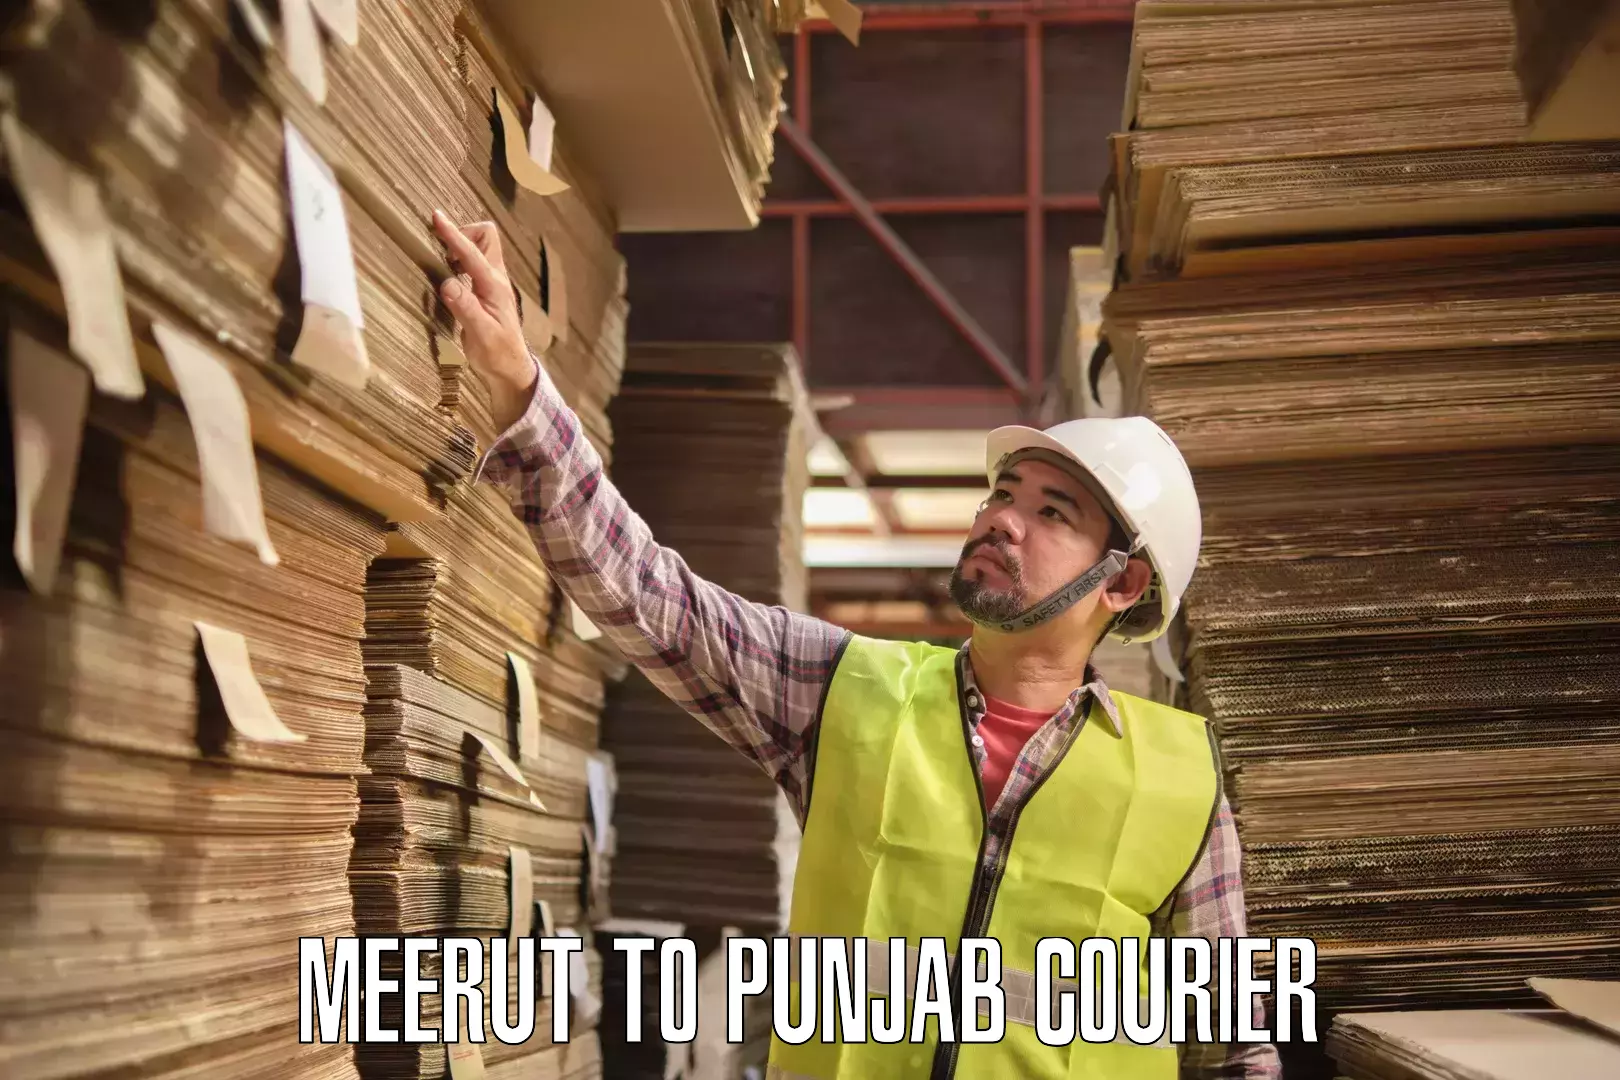 Customer-focused courier Meerut to Jalandhar